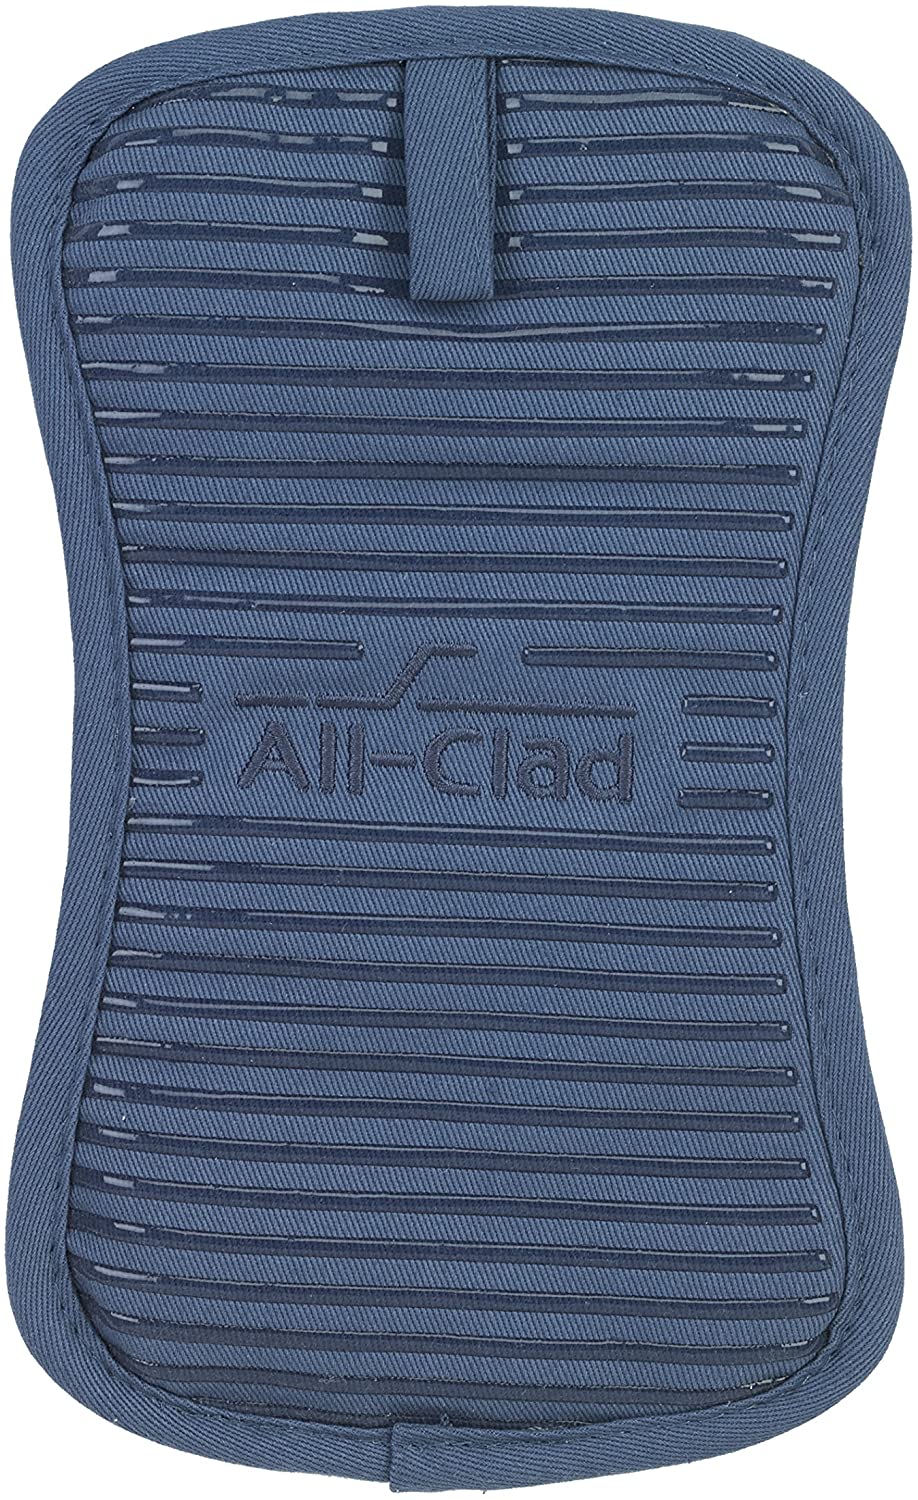 All-Clad All-Clad Silicone Pot Holder, Chili